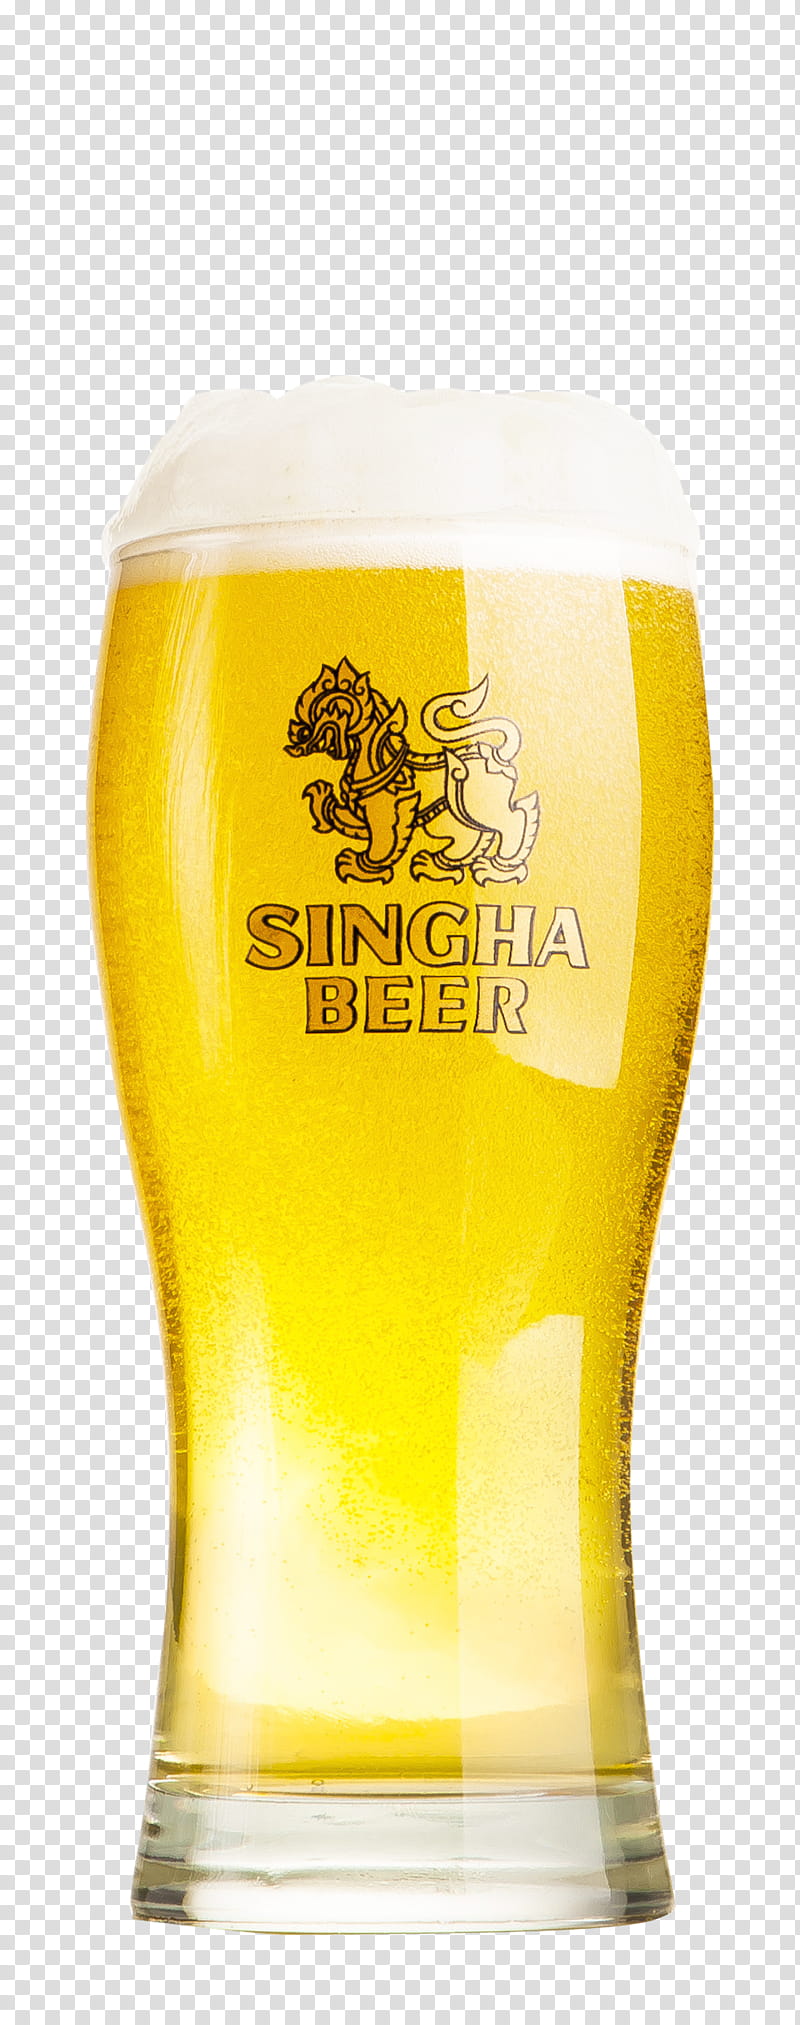 Beer, Lager, Chang Beer, Erdinger, Wheat Beer, Singha, Ale, Witbier transparent background PNG clipart